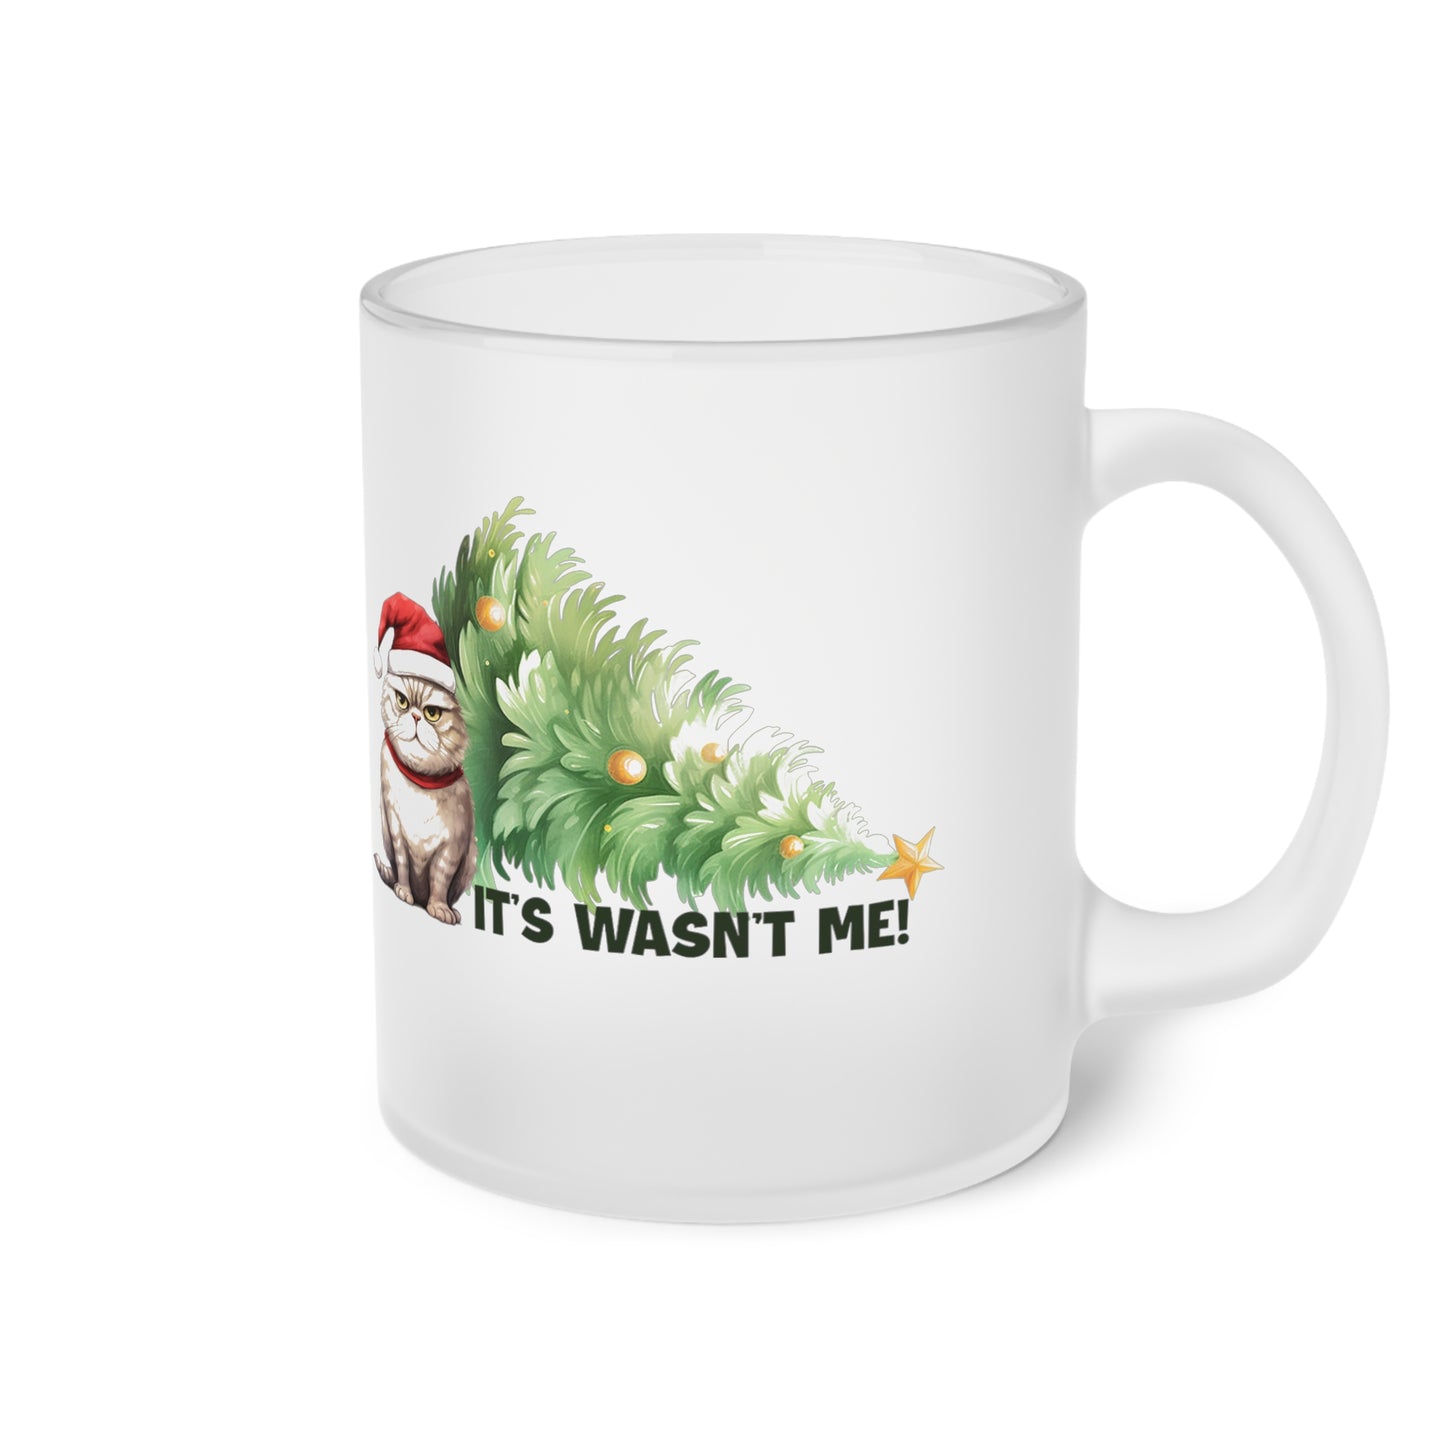 Frosted Glass Mug, Cute Christmas Mug, Cat Themed Holiday Mug, Frosted Mug, Cute Coffee Mug, Holiday Coffee Mug, Frosted Holiday Coffee Mug